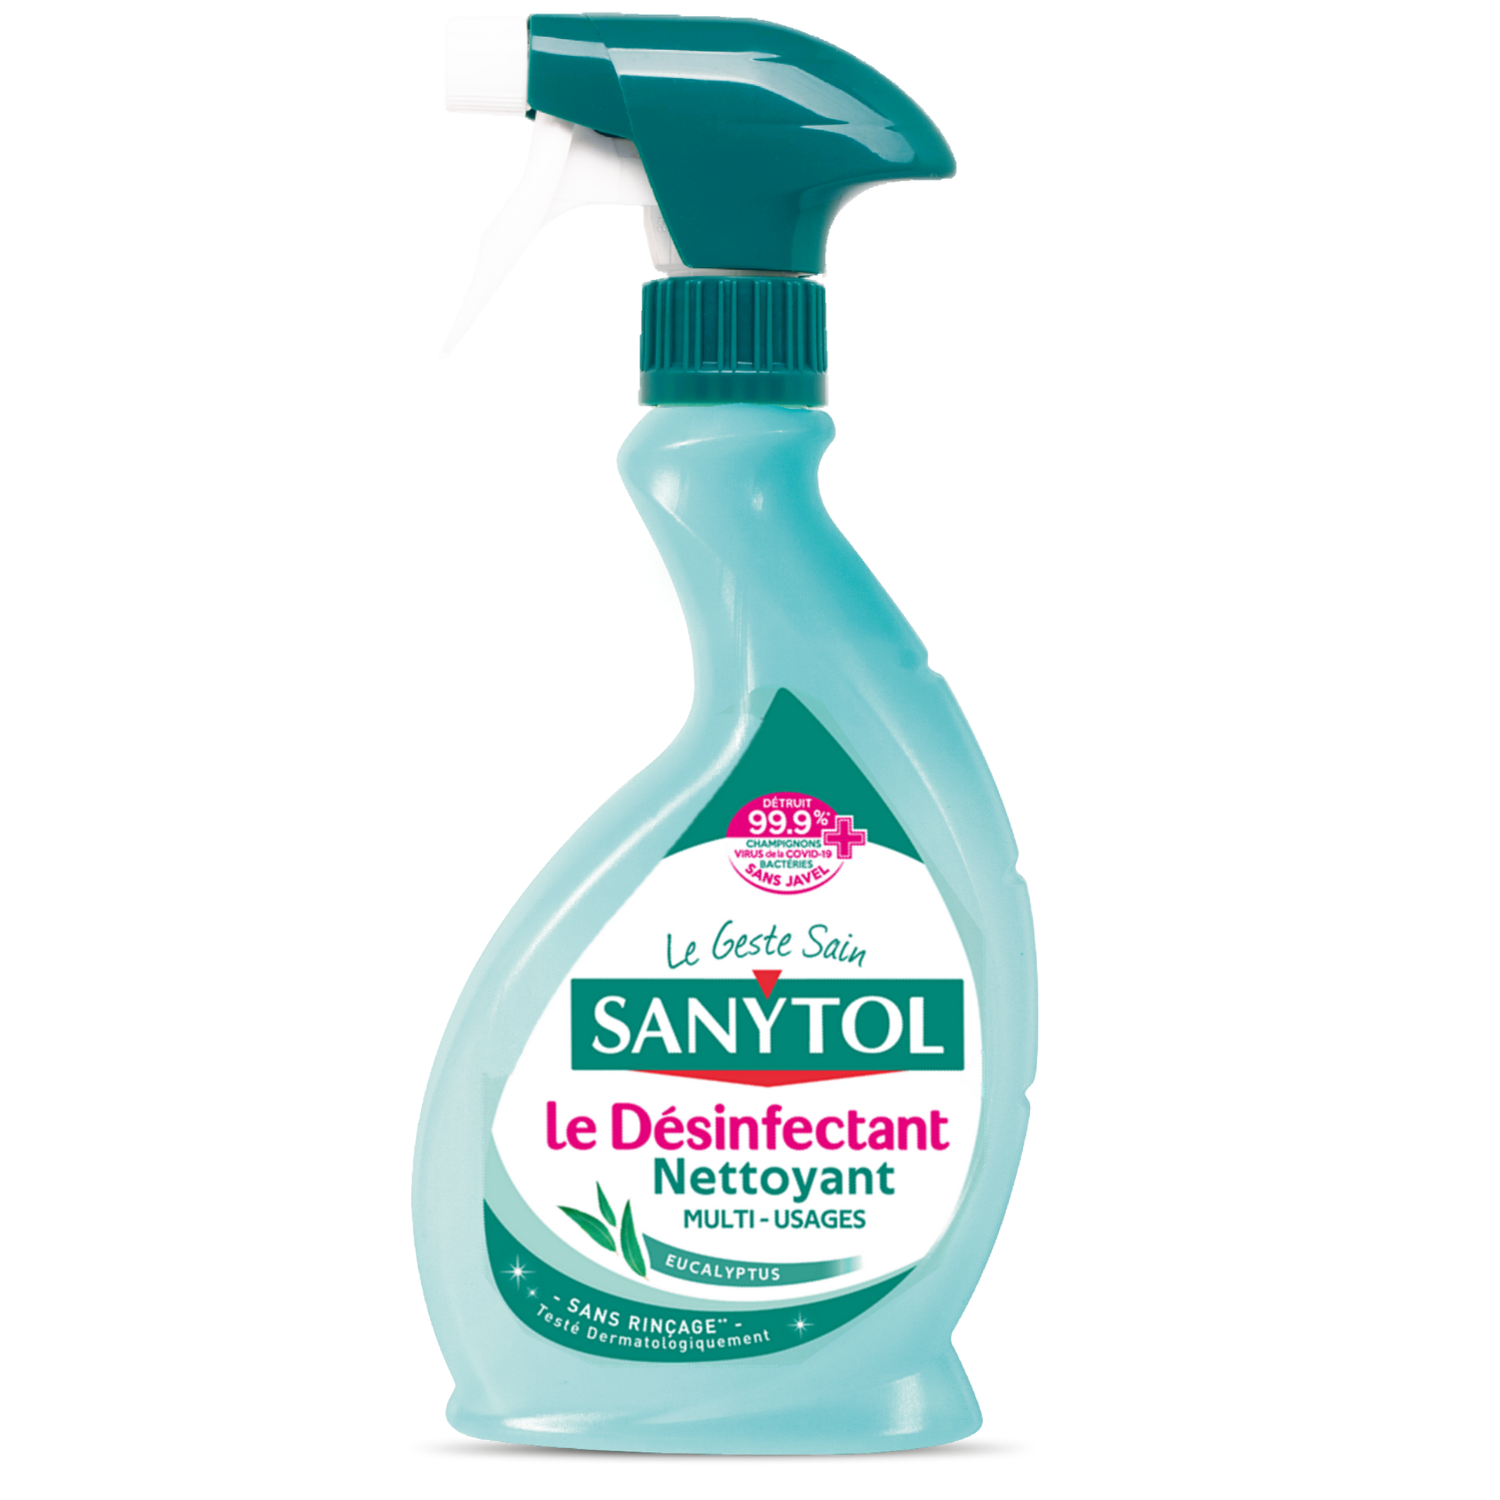 Desinfectante Aerosol Multiusos 2 en 1 Sanytol Menta 400 ml